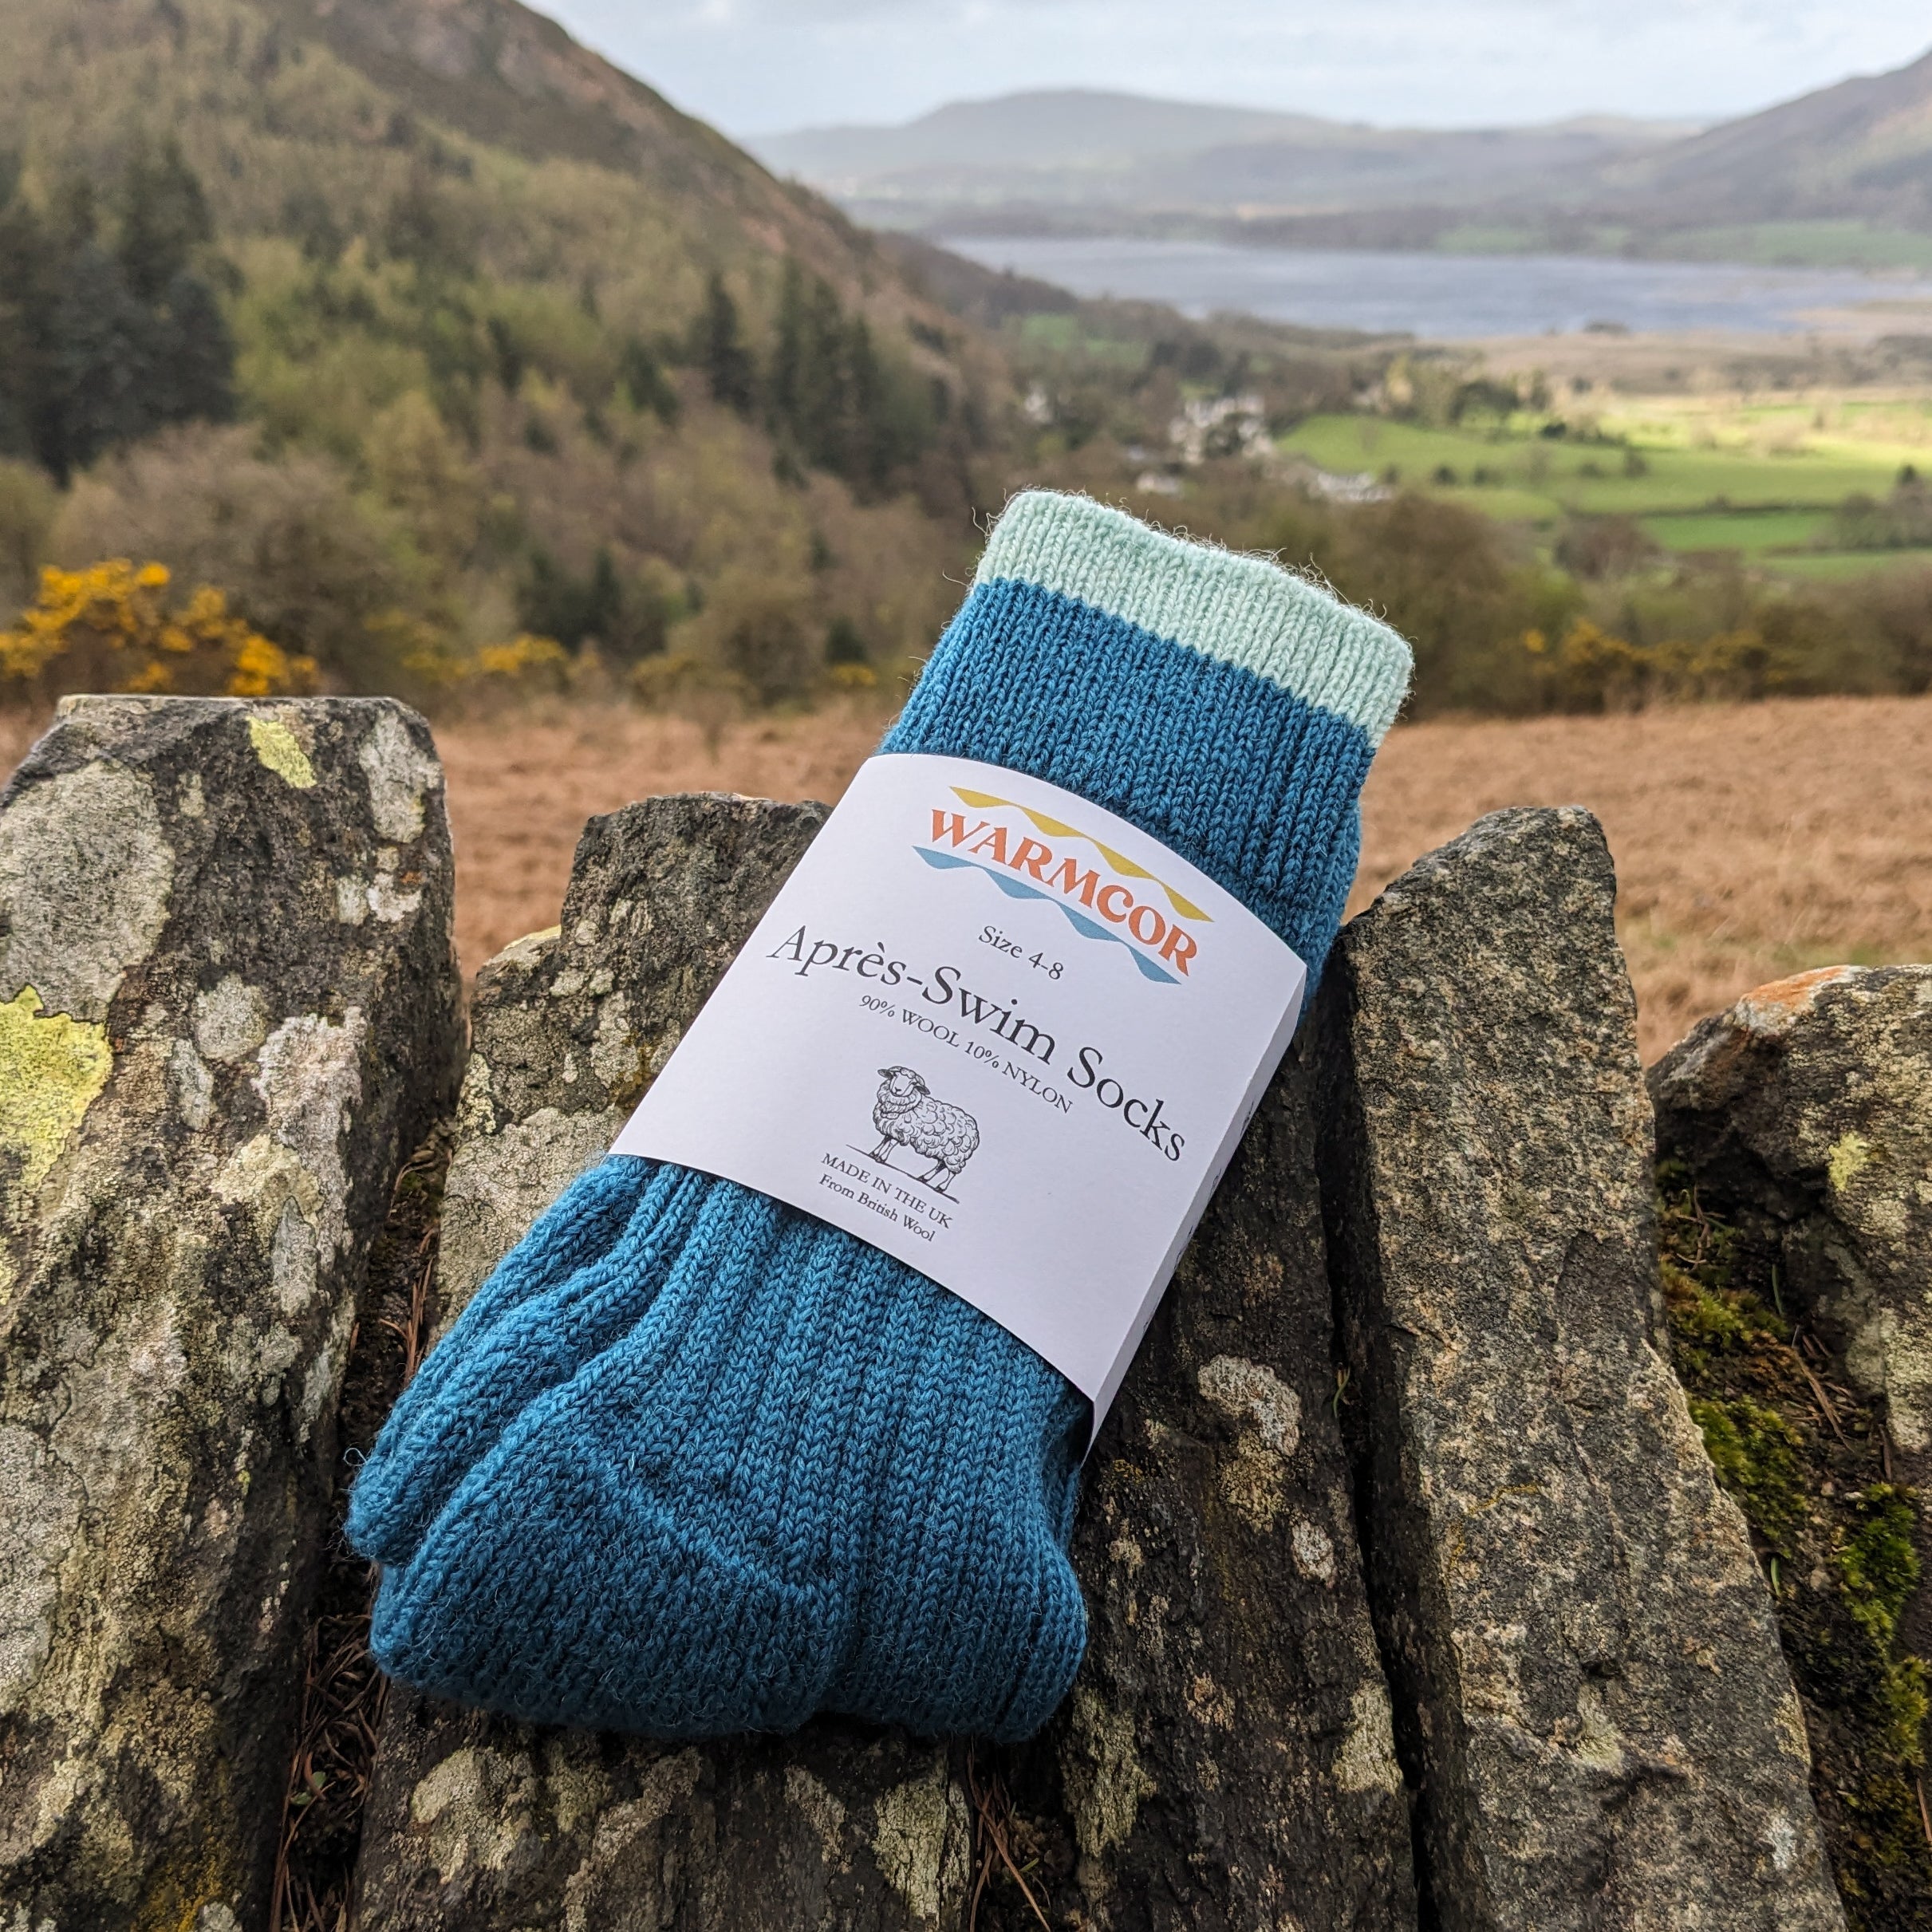 British Wool Socks - Teal with Mint